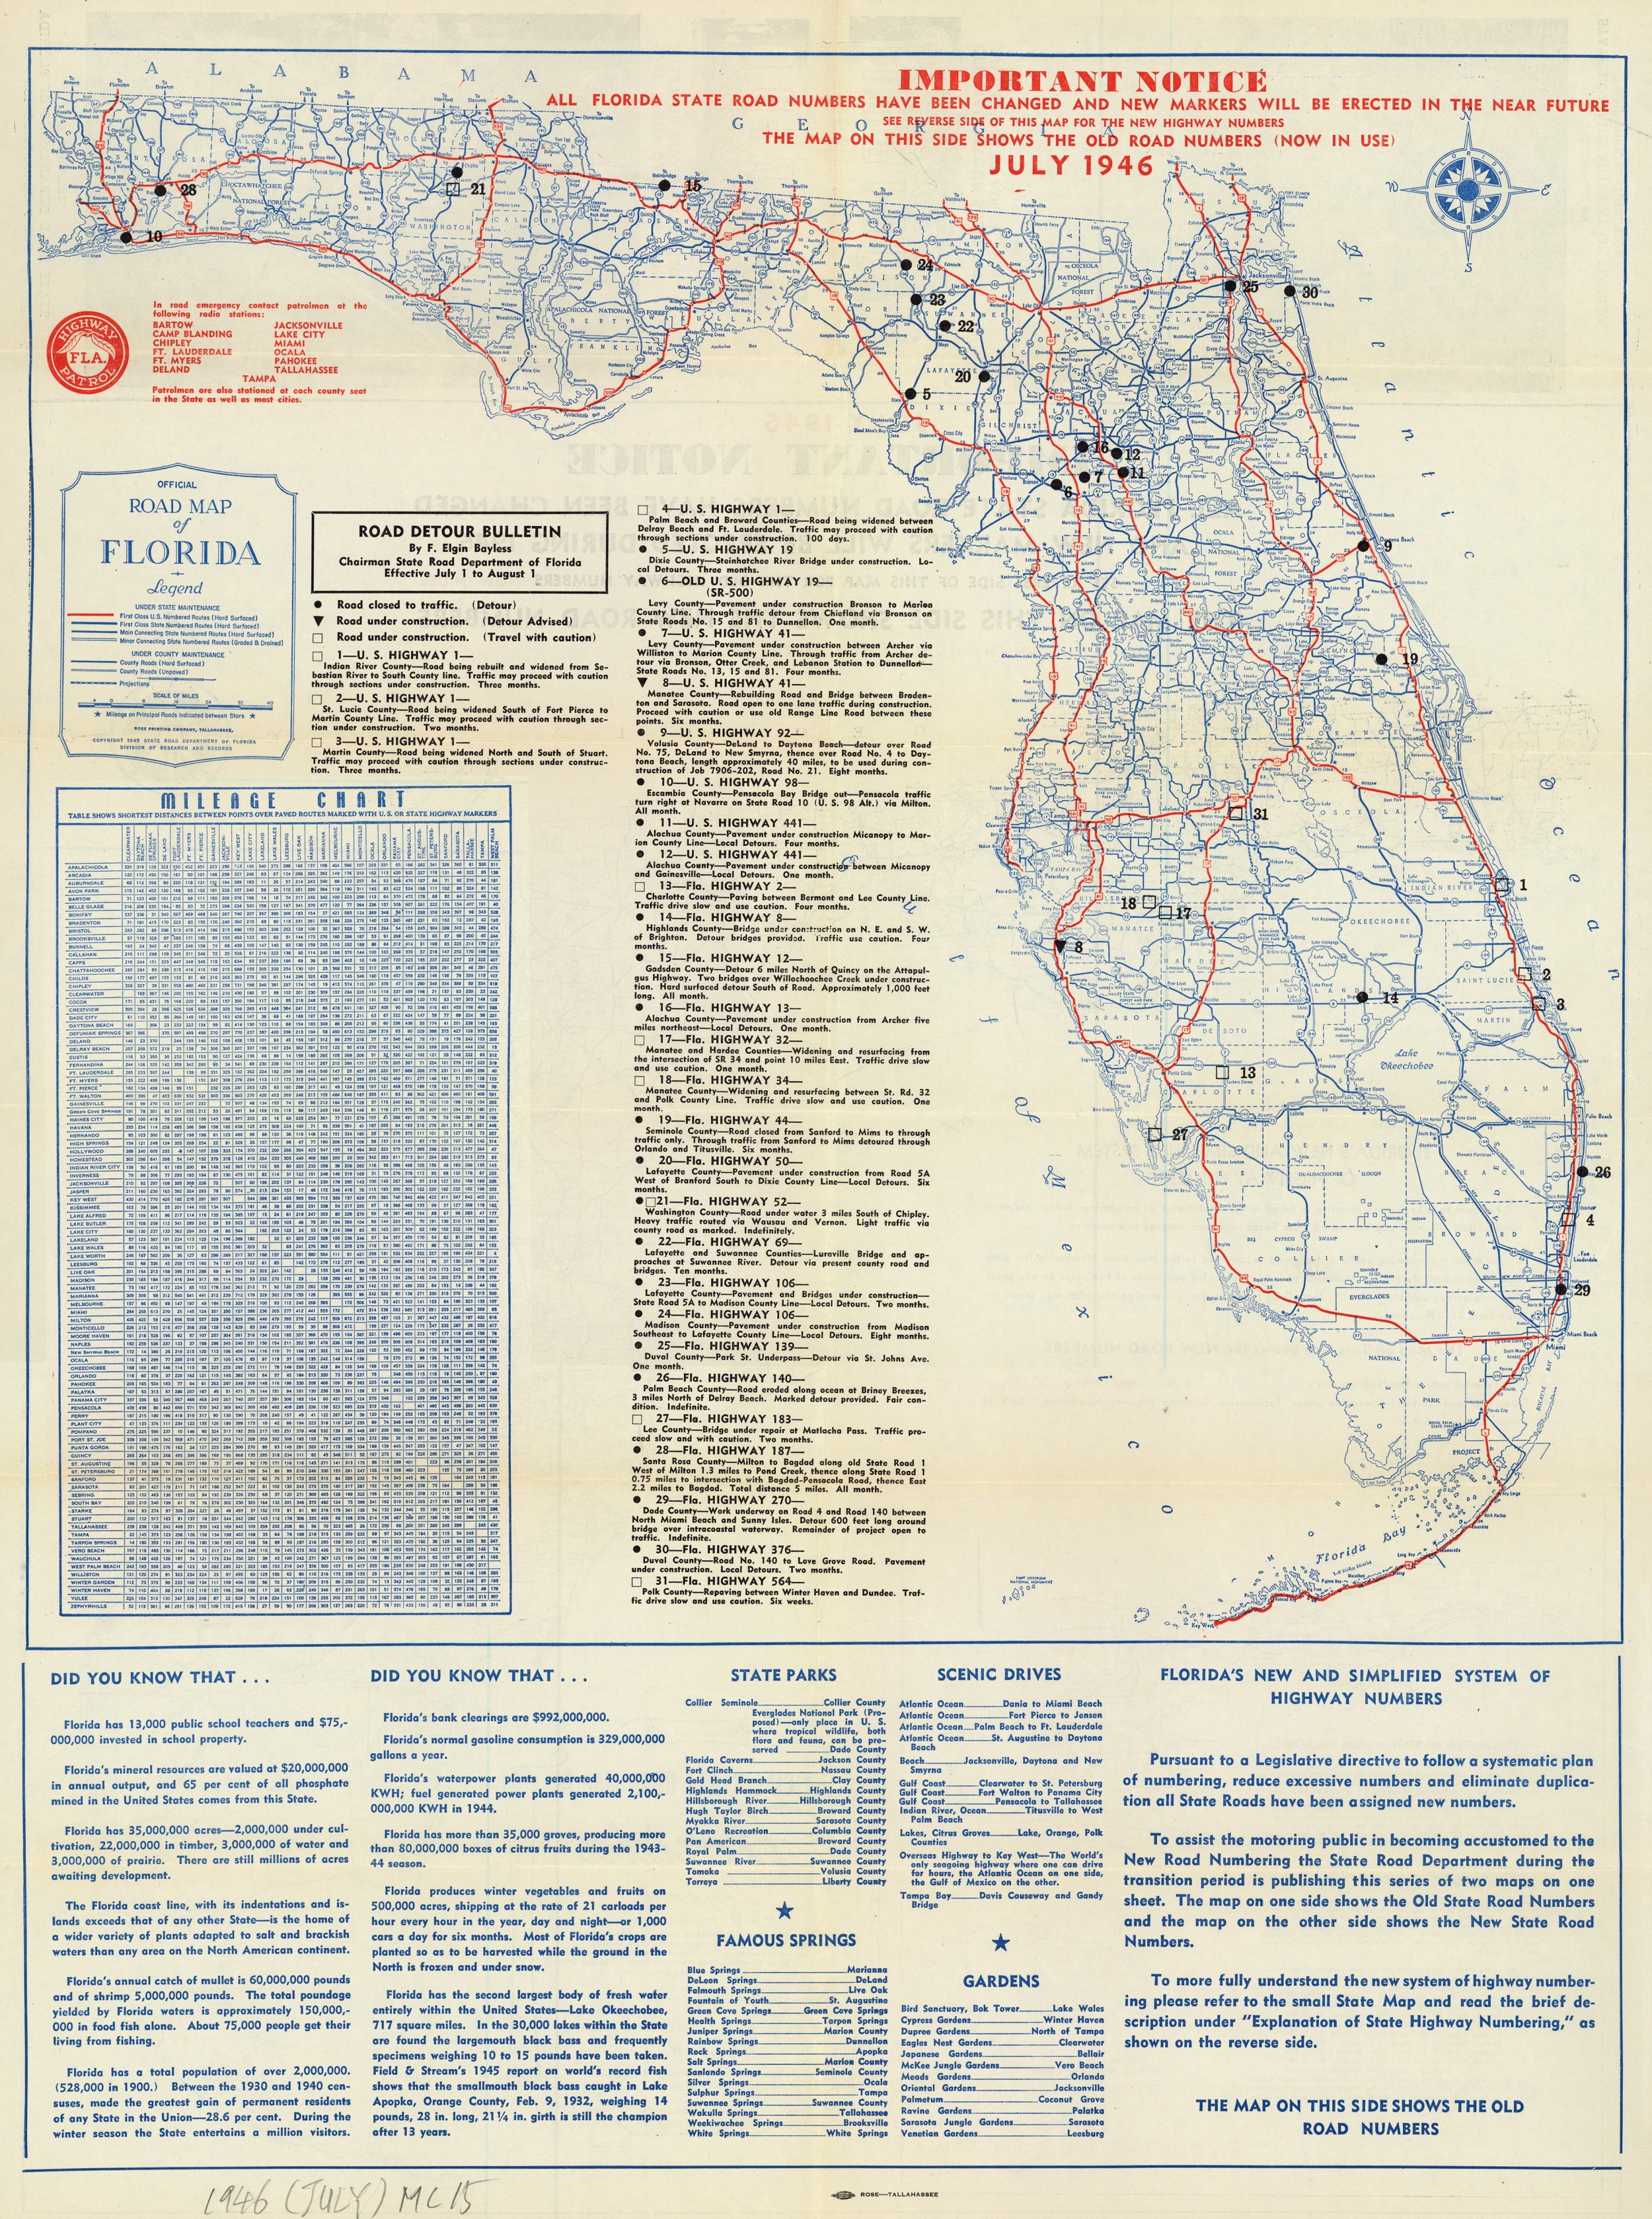 Florida Memory - Official Road Map Of Florida, 1946 - Branford Florida Map